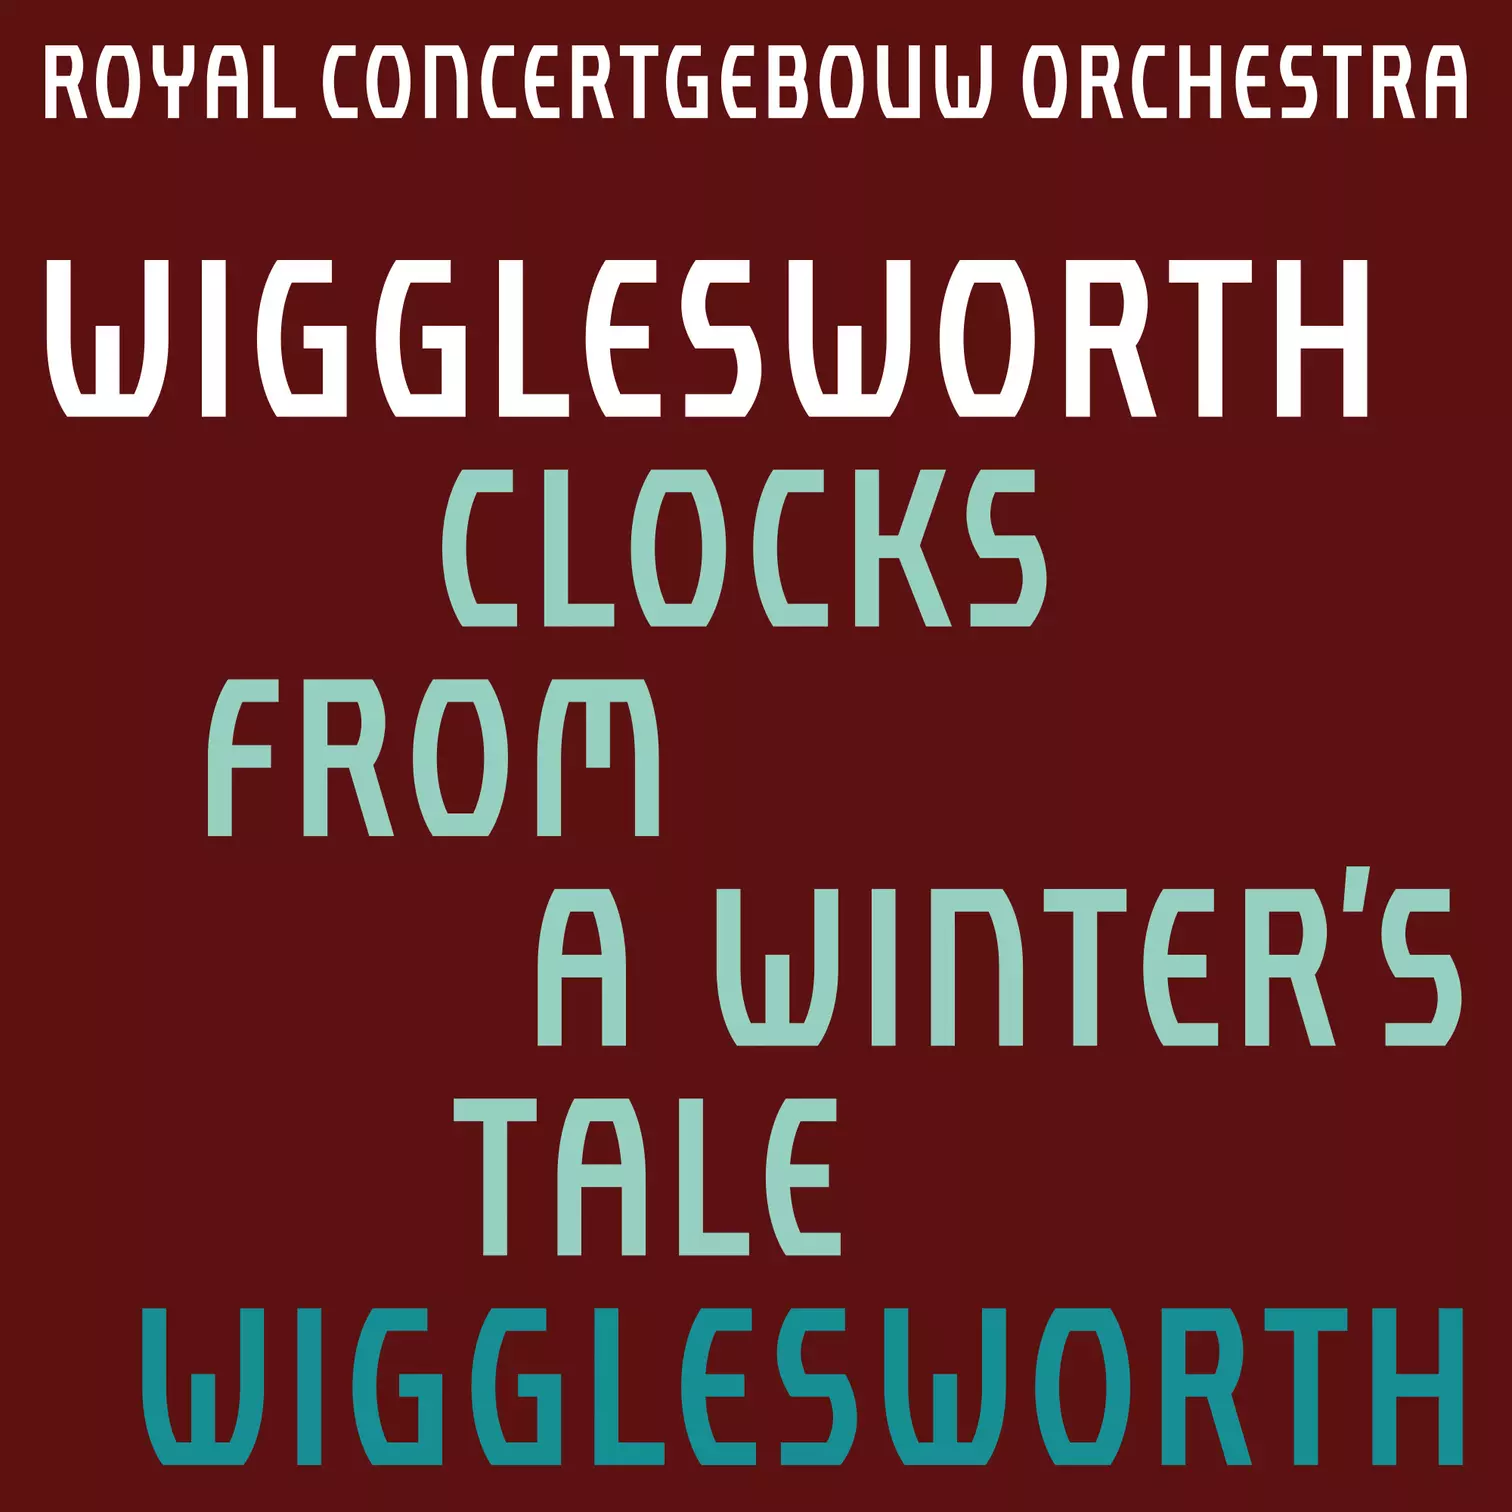 Wigglesworth: Clocks from A Winter’s Tale